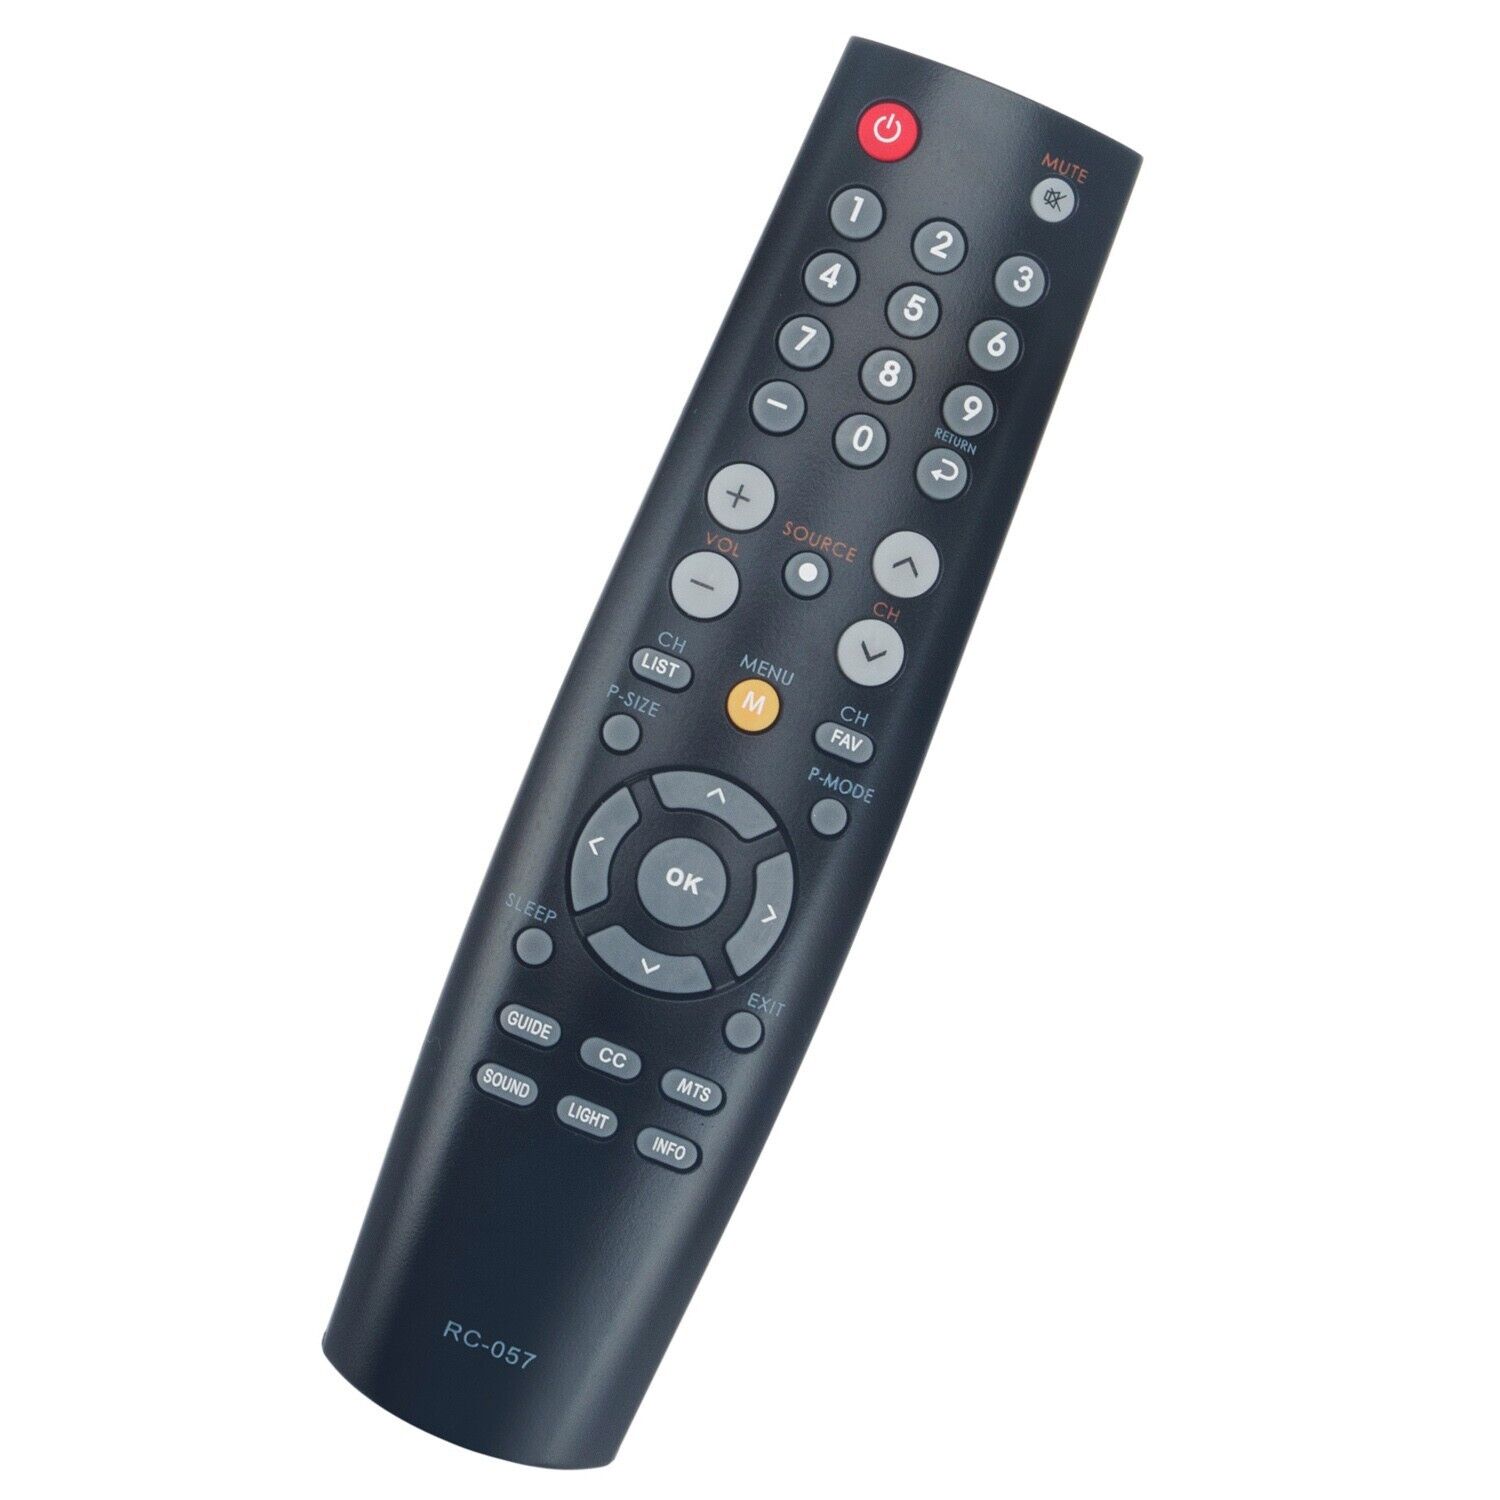 thinkstar Replace Remote For Coby Tv Ledtv1926 Tftv2225 Ledtv3226 Tftv2425 Tftv3229